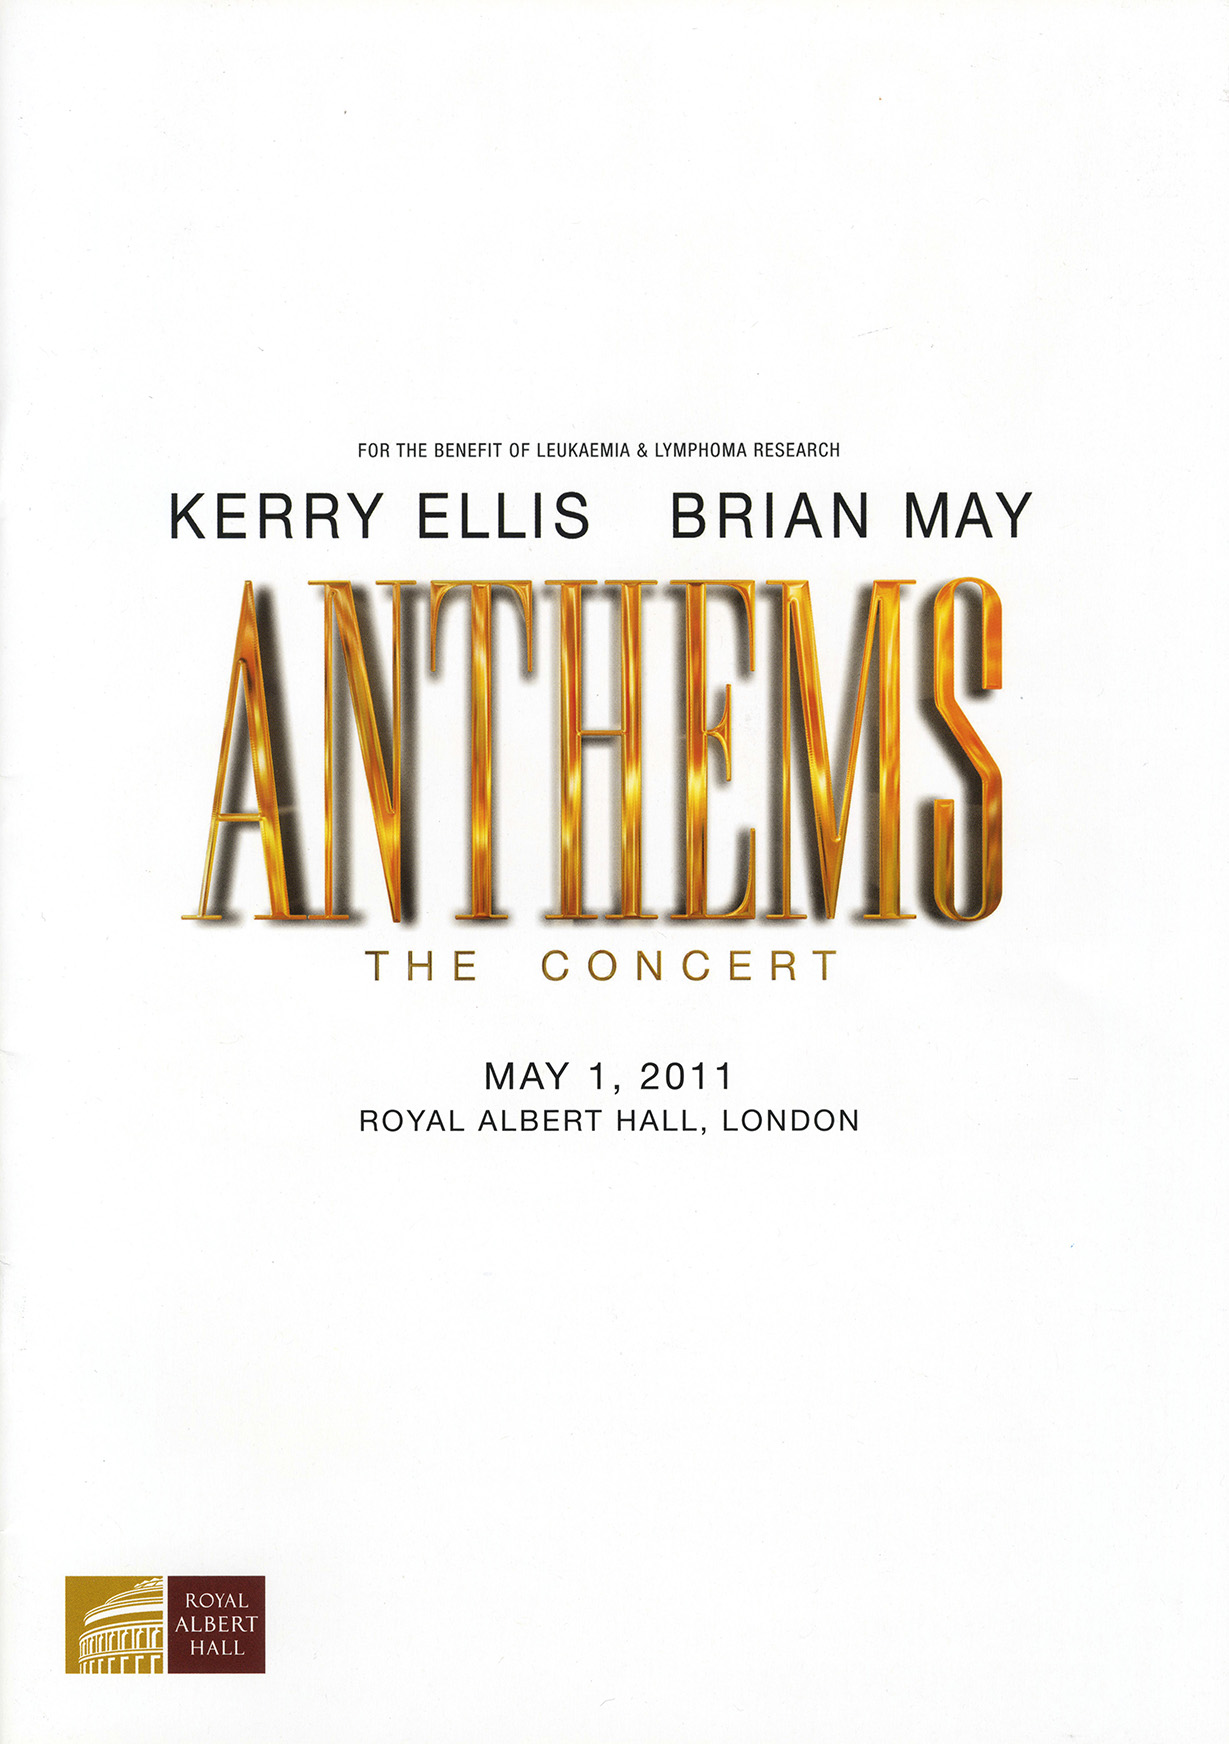 Brian + Kerry Ellis - London 01.05.2011 (Anthems)